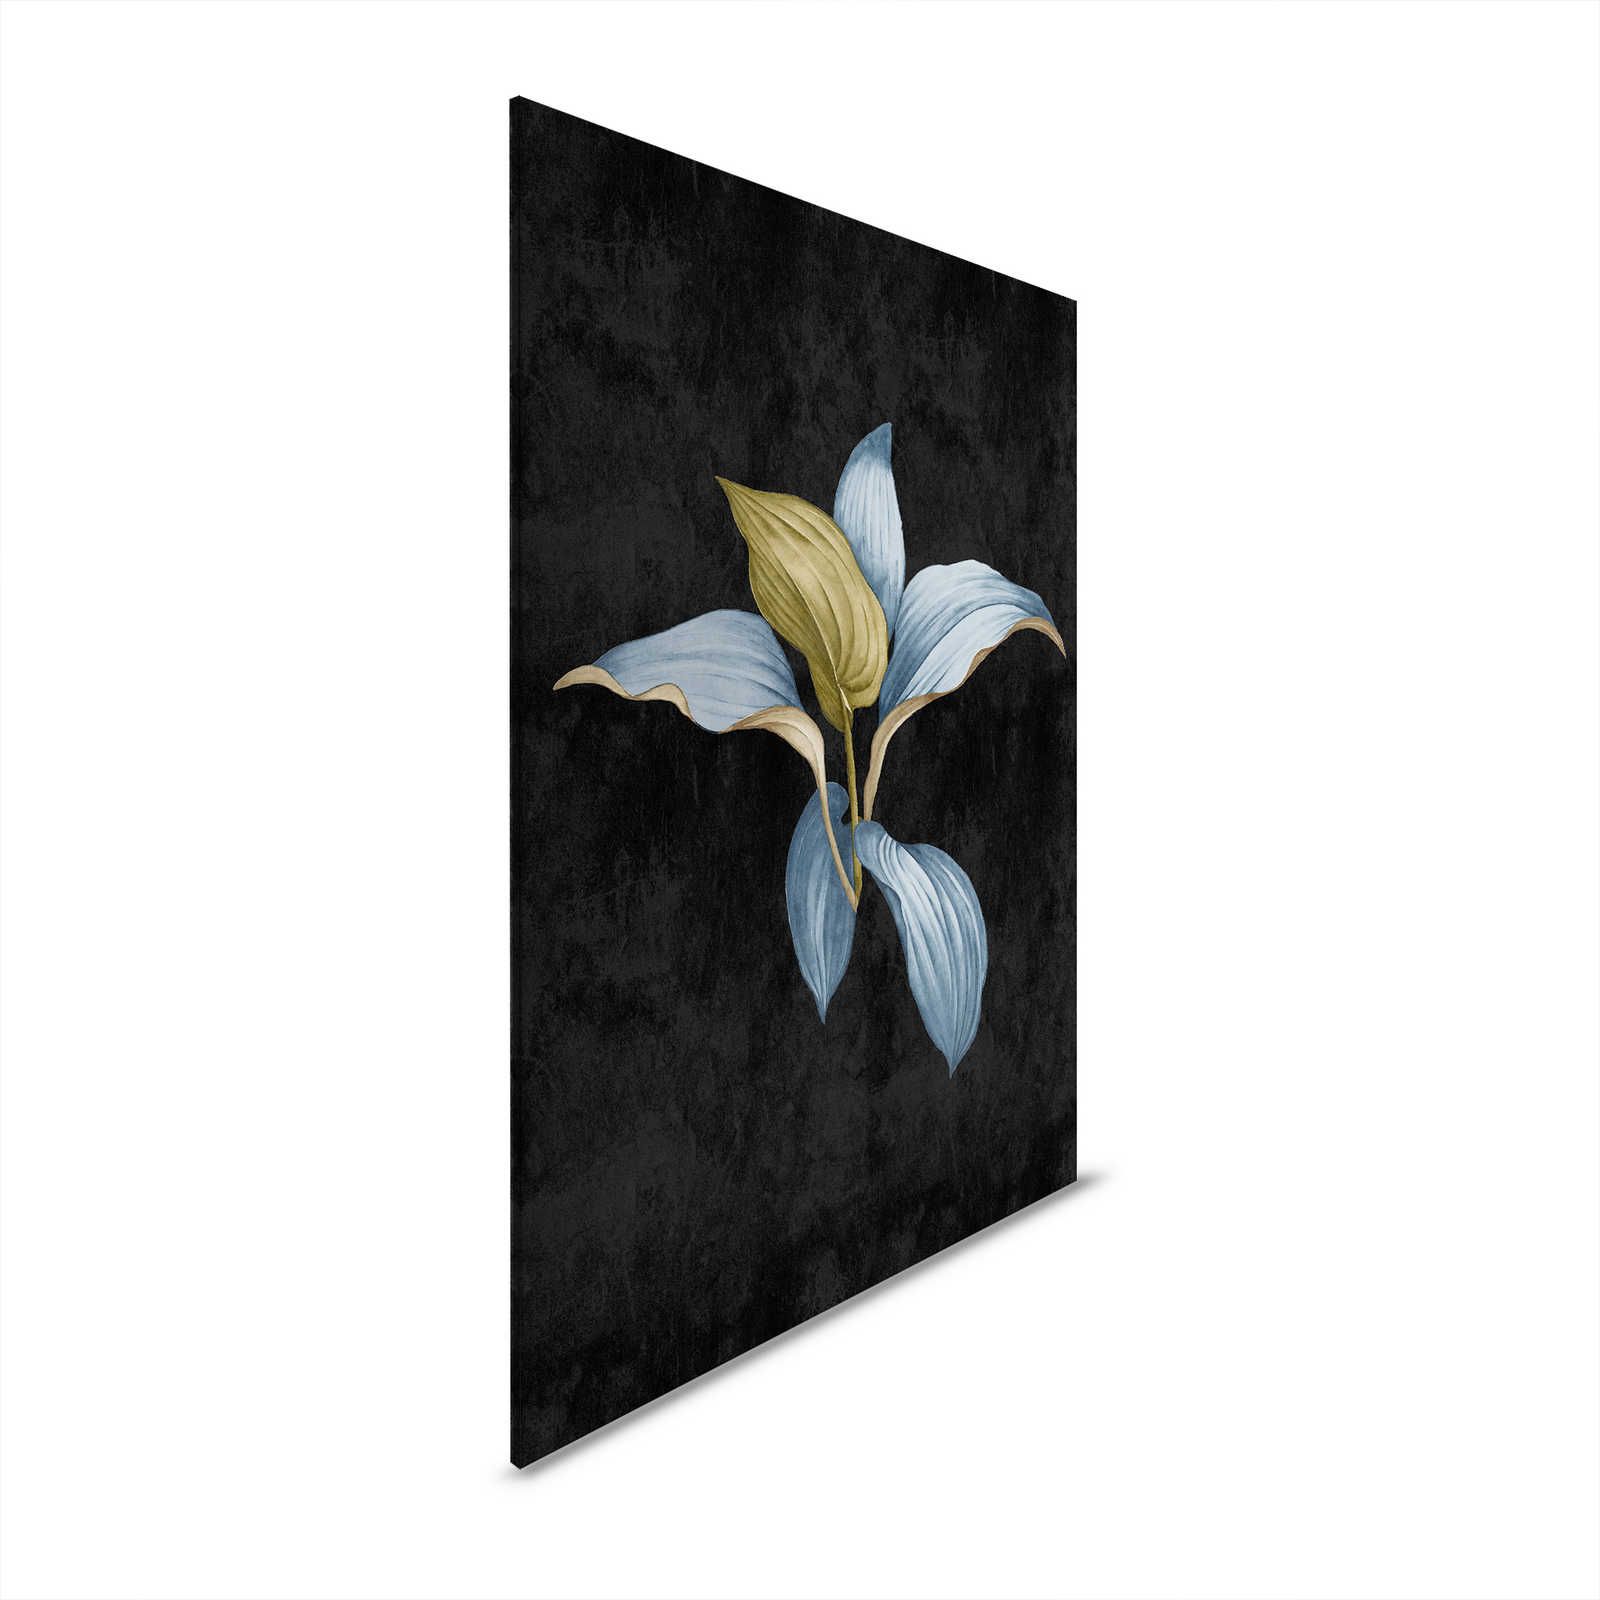 Fiji 3 - Dark Canvas Painting Botanical Design in Blue & Green - 0.80 m x 1.20 m
